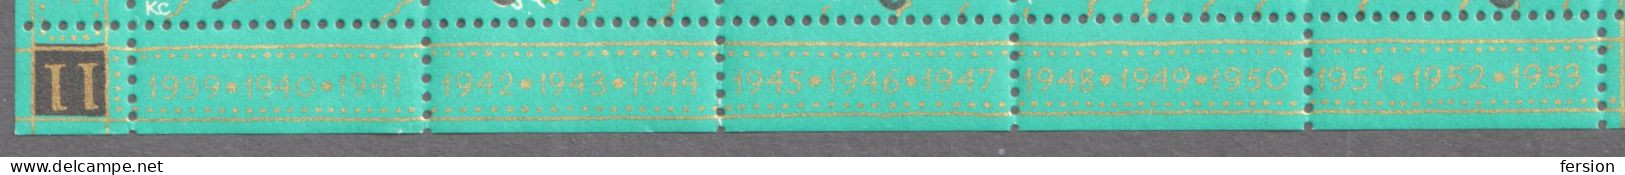 1959 overprint - indian mexico china COSTUMES Christmas JUL JULEN charity label cinderella vignette 1953 gold Danmark